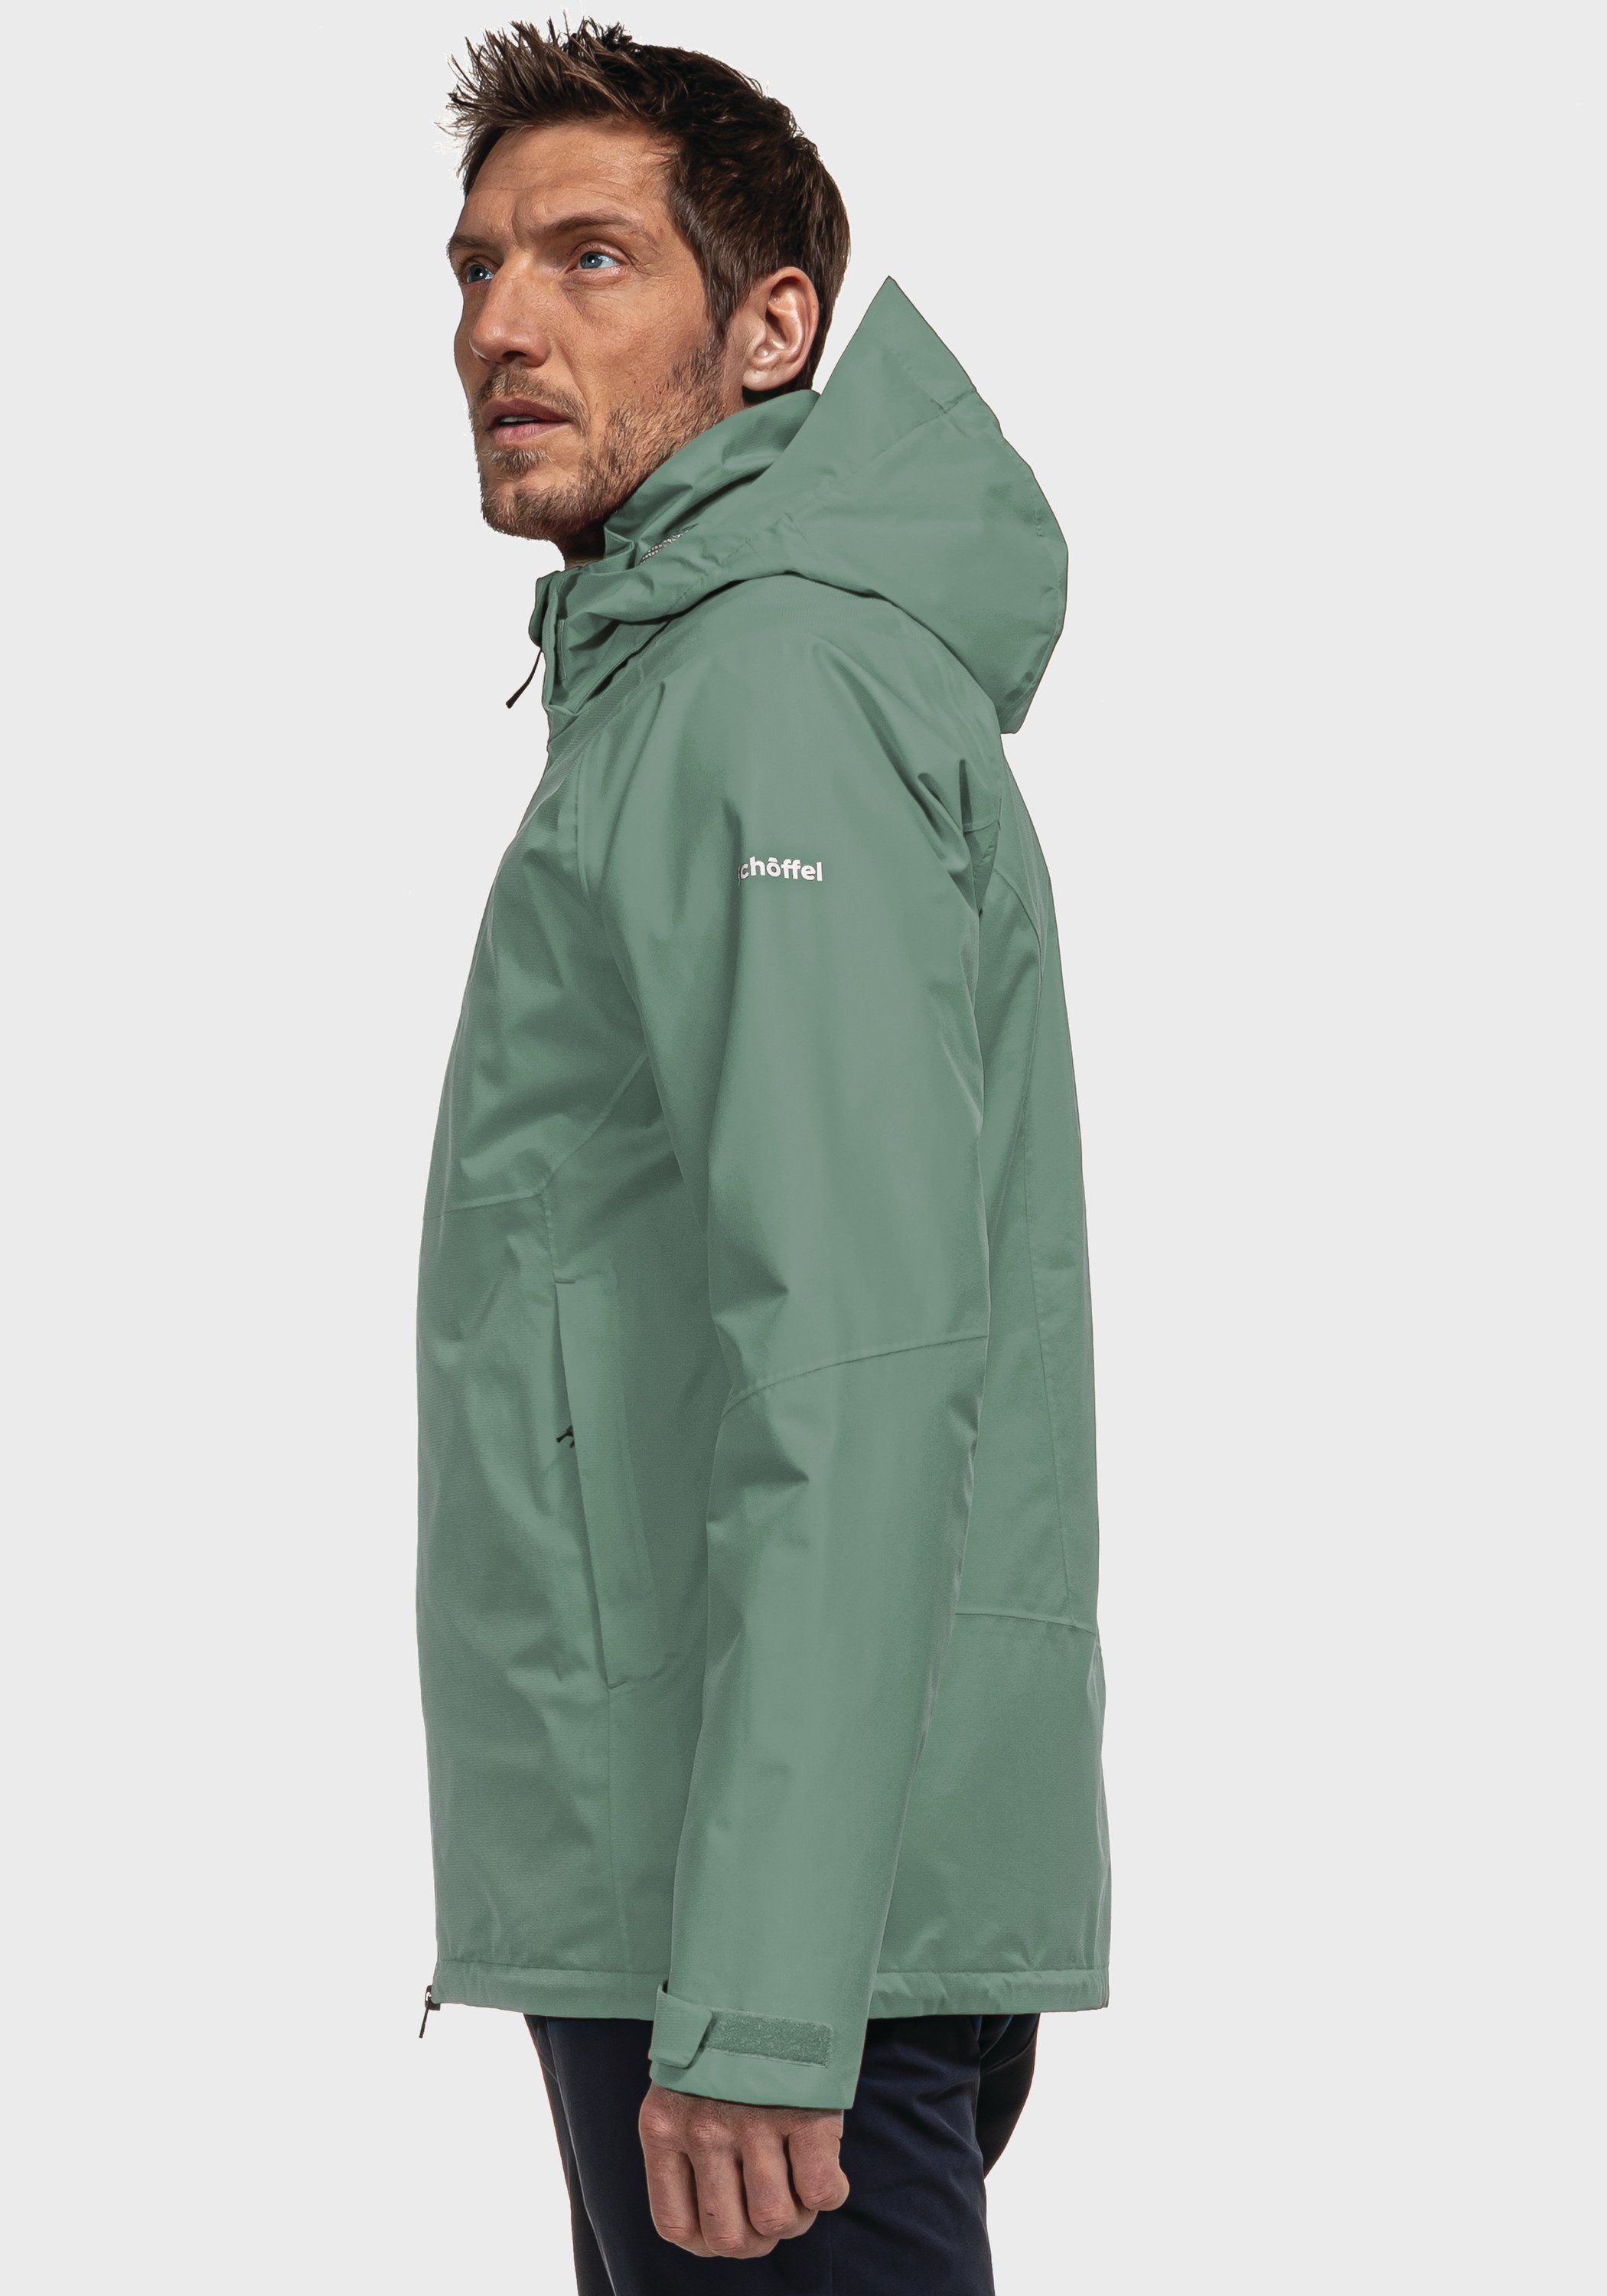 Jacket grün Easy Regenjacke Schöffel XT M